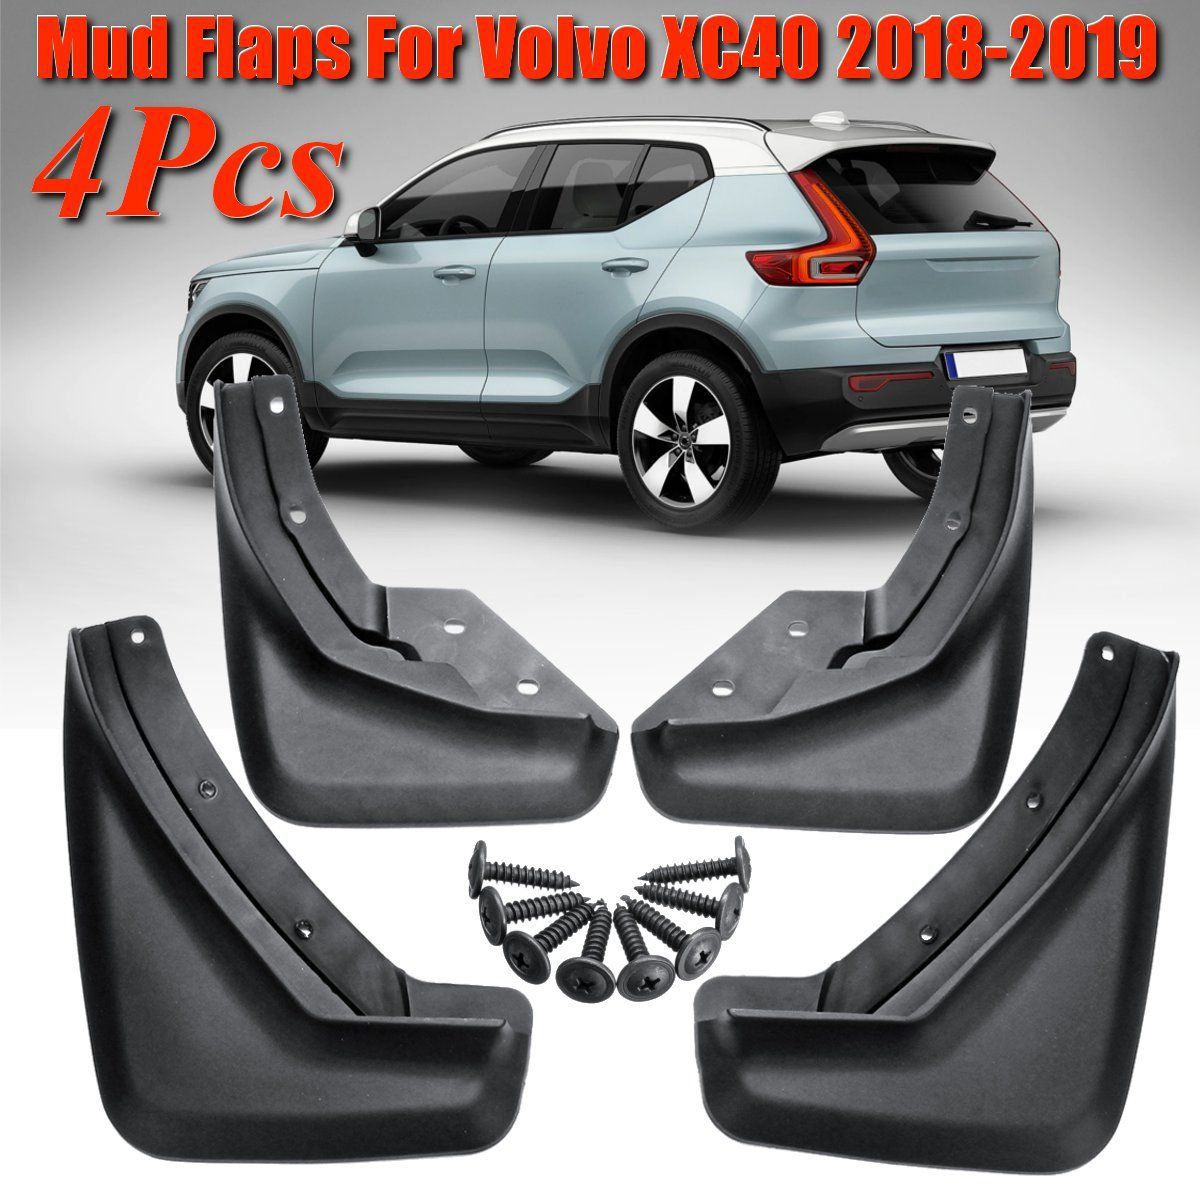 4Pcs-Car-Front-Rear-Car-Splash-Mudguards-Guards-Mud-Flaps-For-Volvo-XC40-2018-2019-1639567